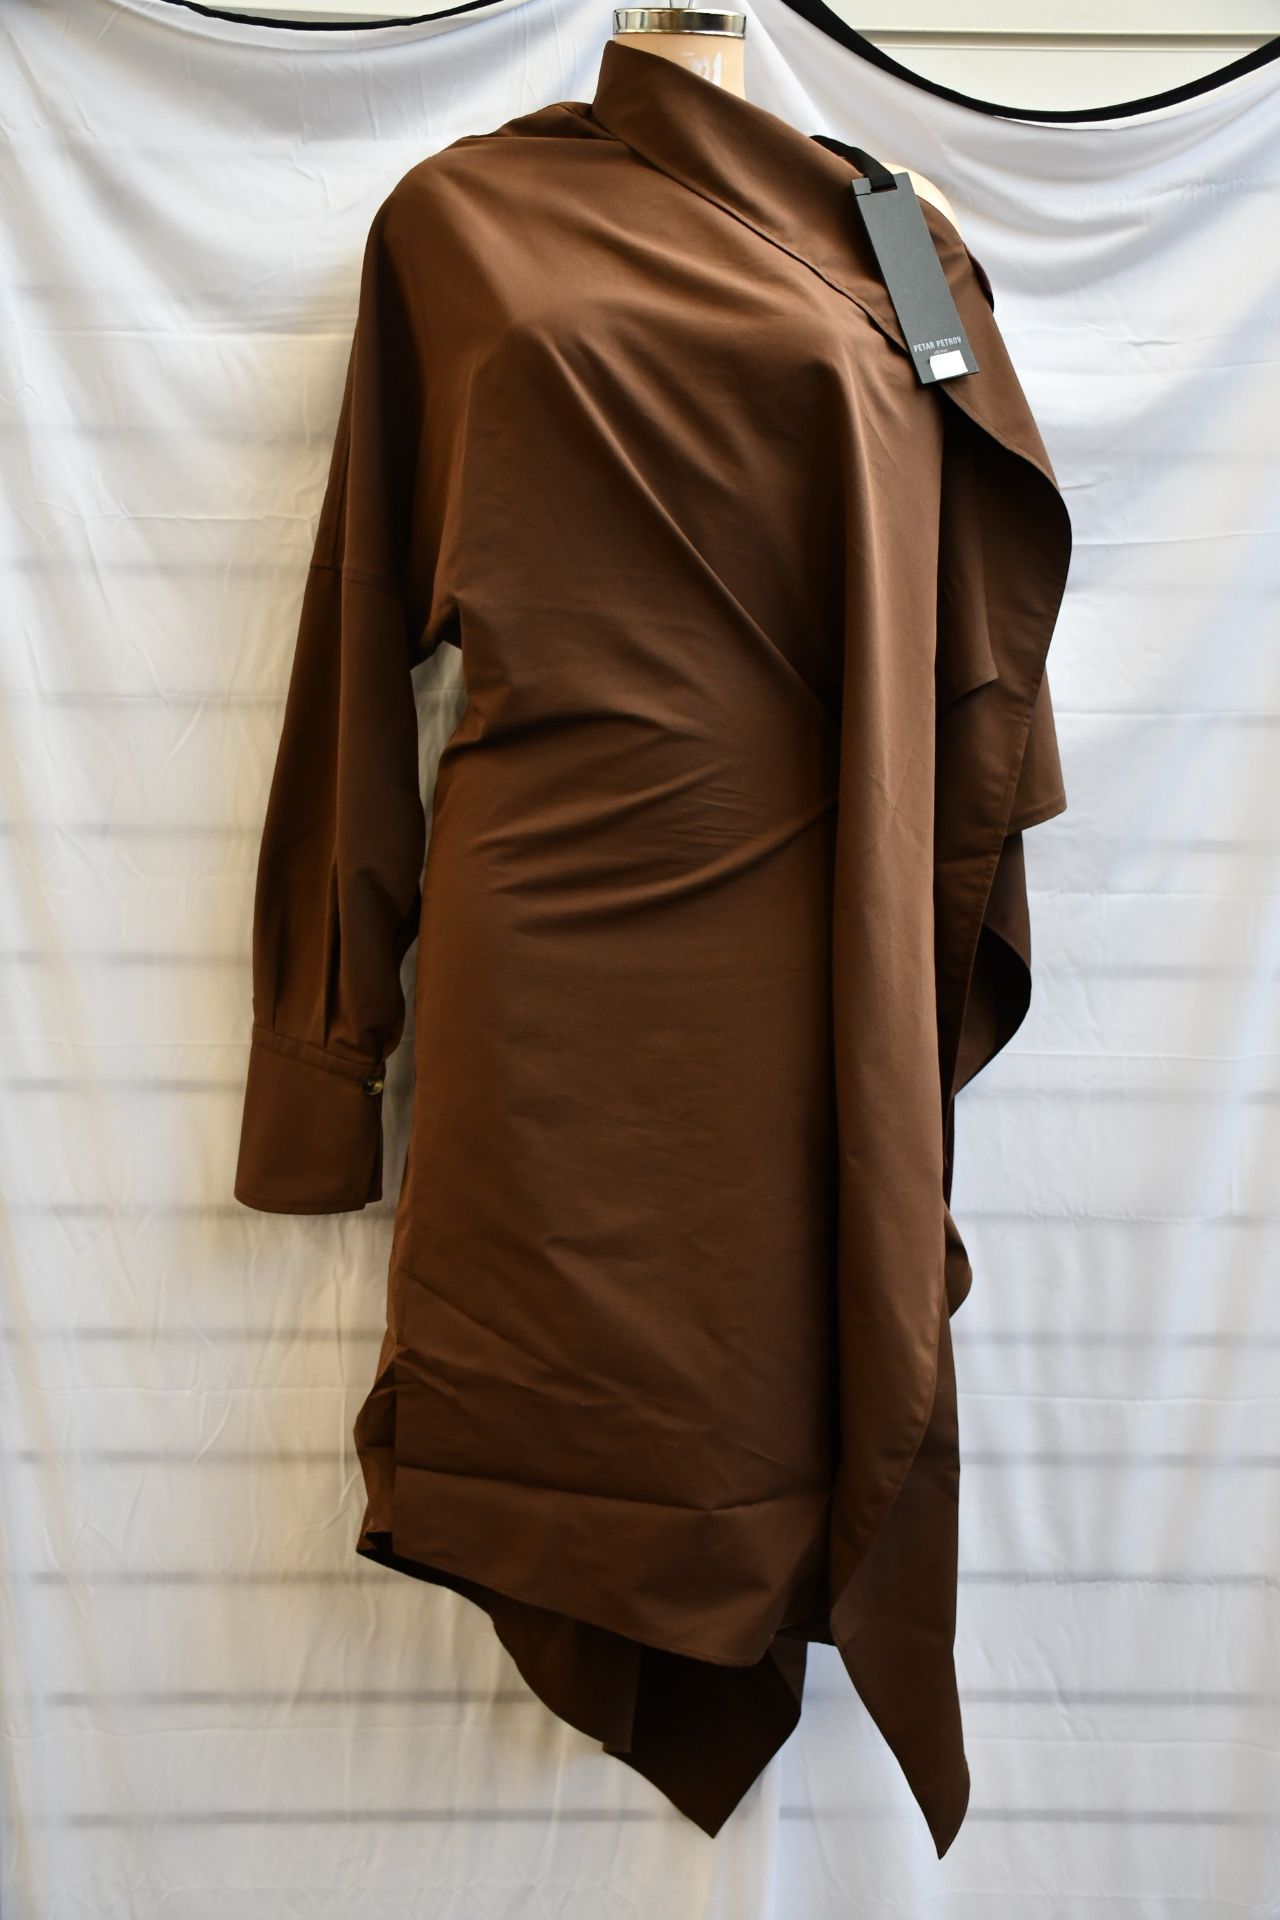 An as new Petar Petrov Aaber asymmetric midi dress in dark chocolate (EU 40 - RRP £1,200).